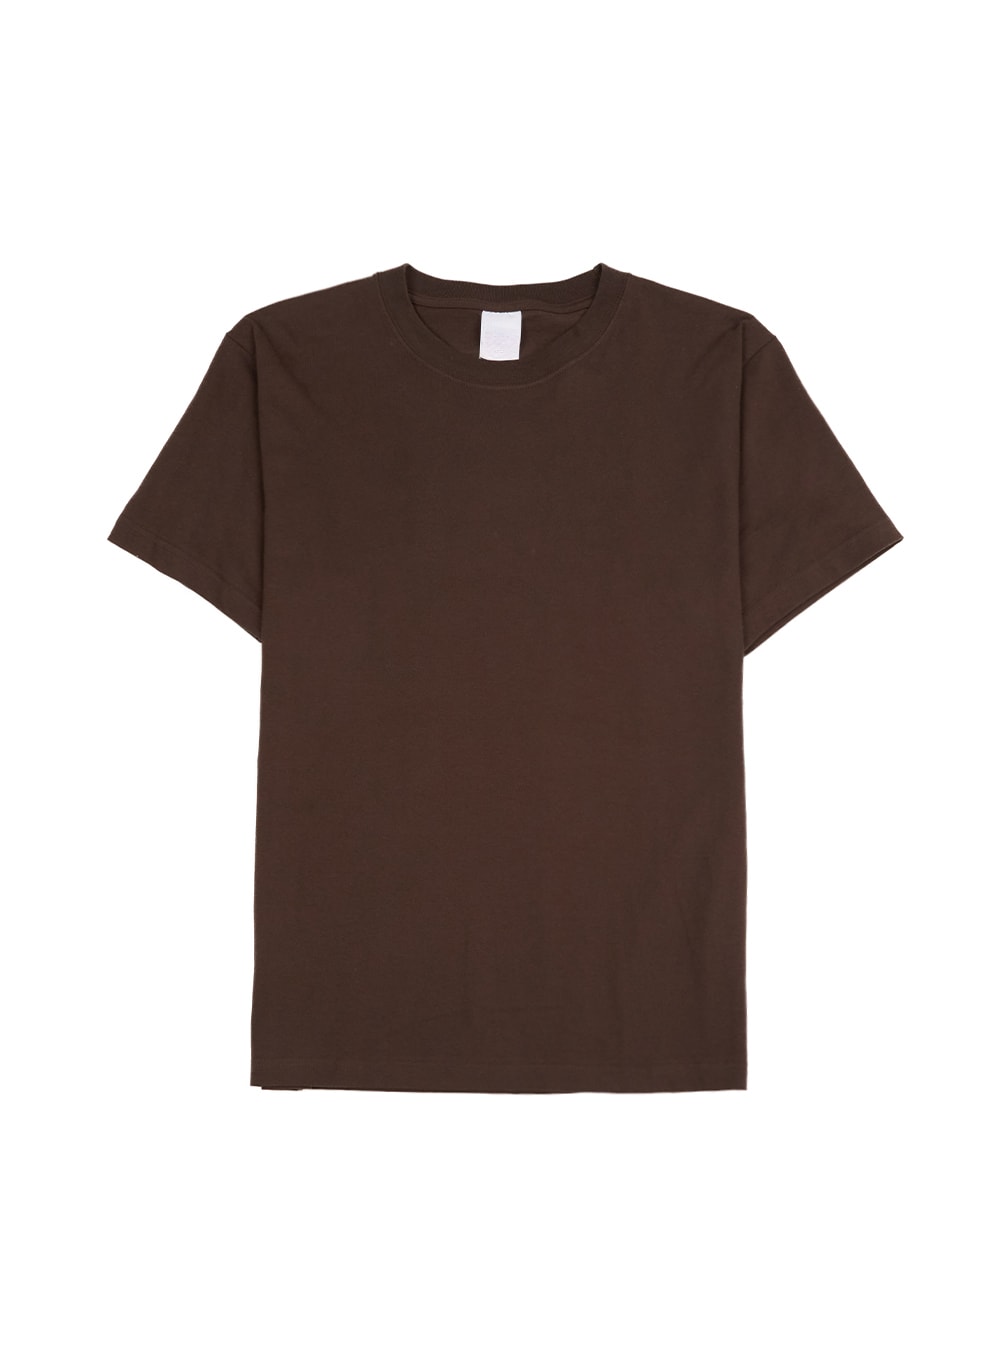 mens-basic-short-sleeve-t-shirt-ia402-brown